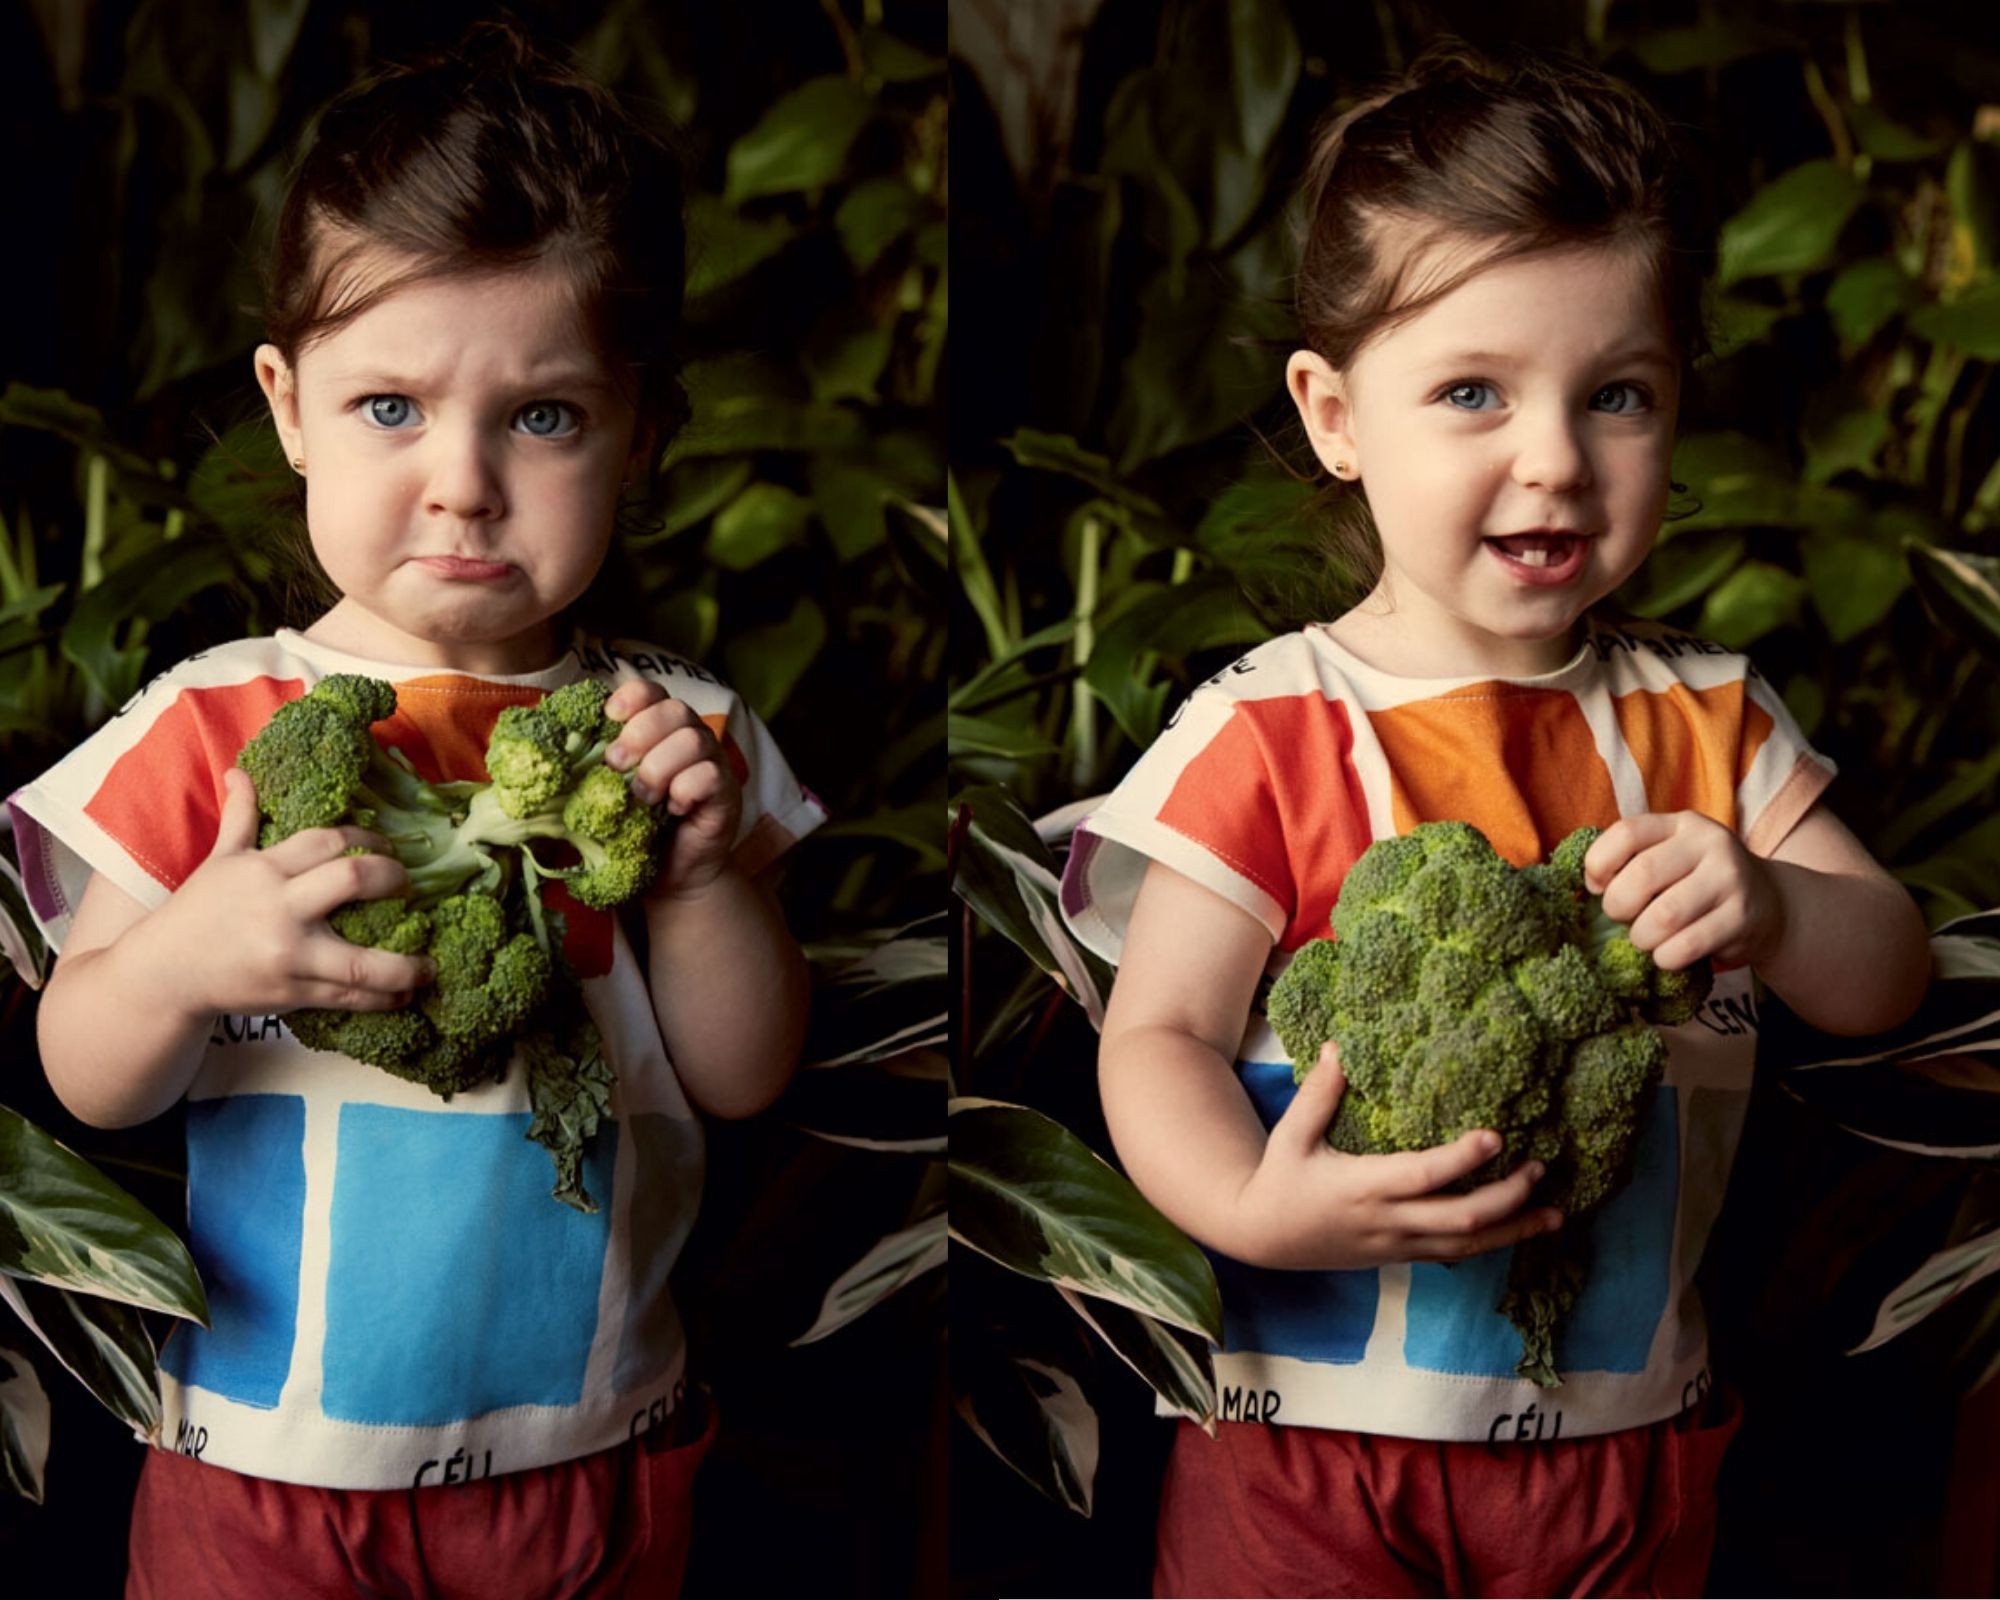 Vegetarianismo infantil sem riscos - Filhos - iG